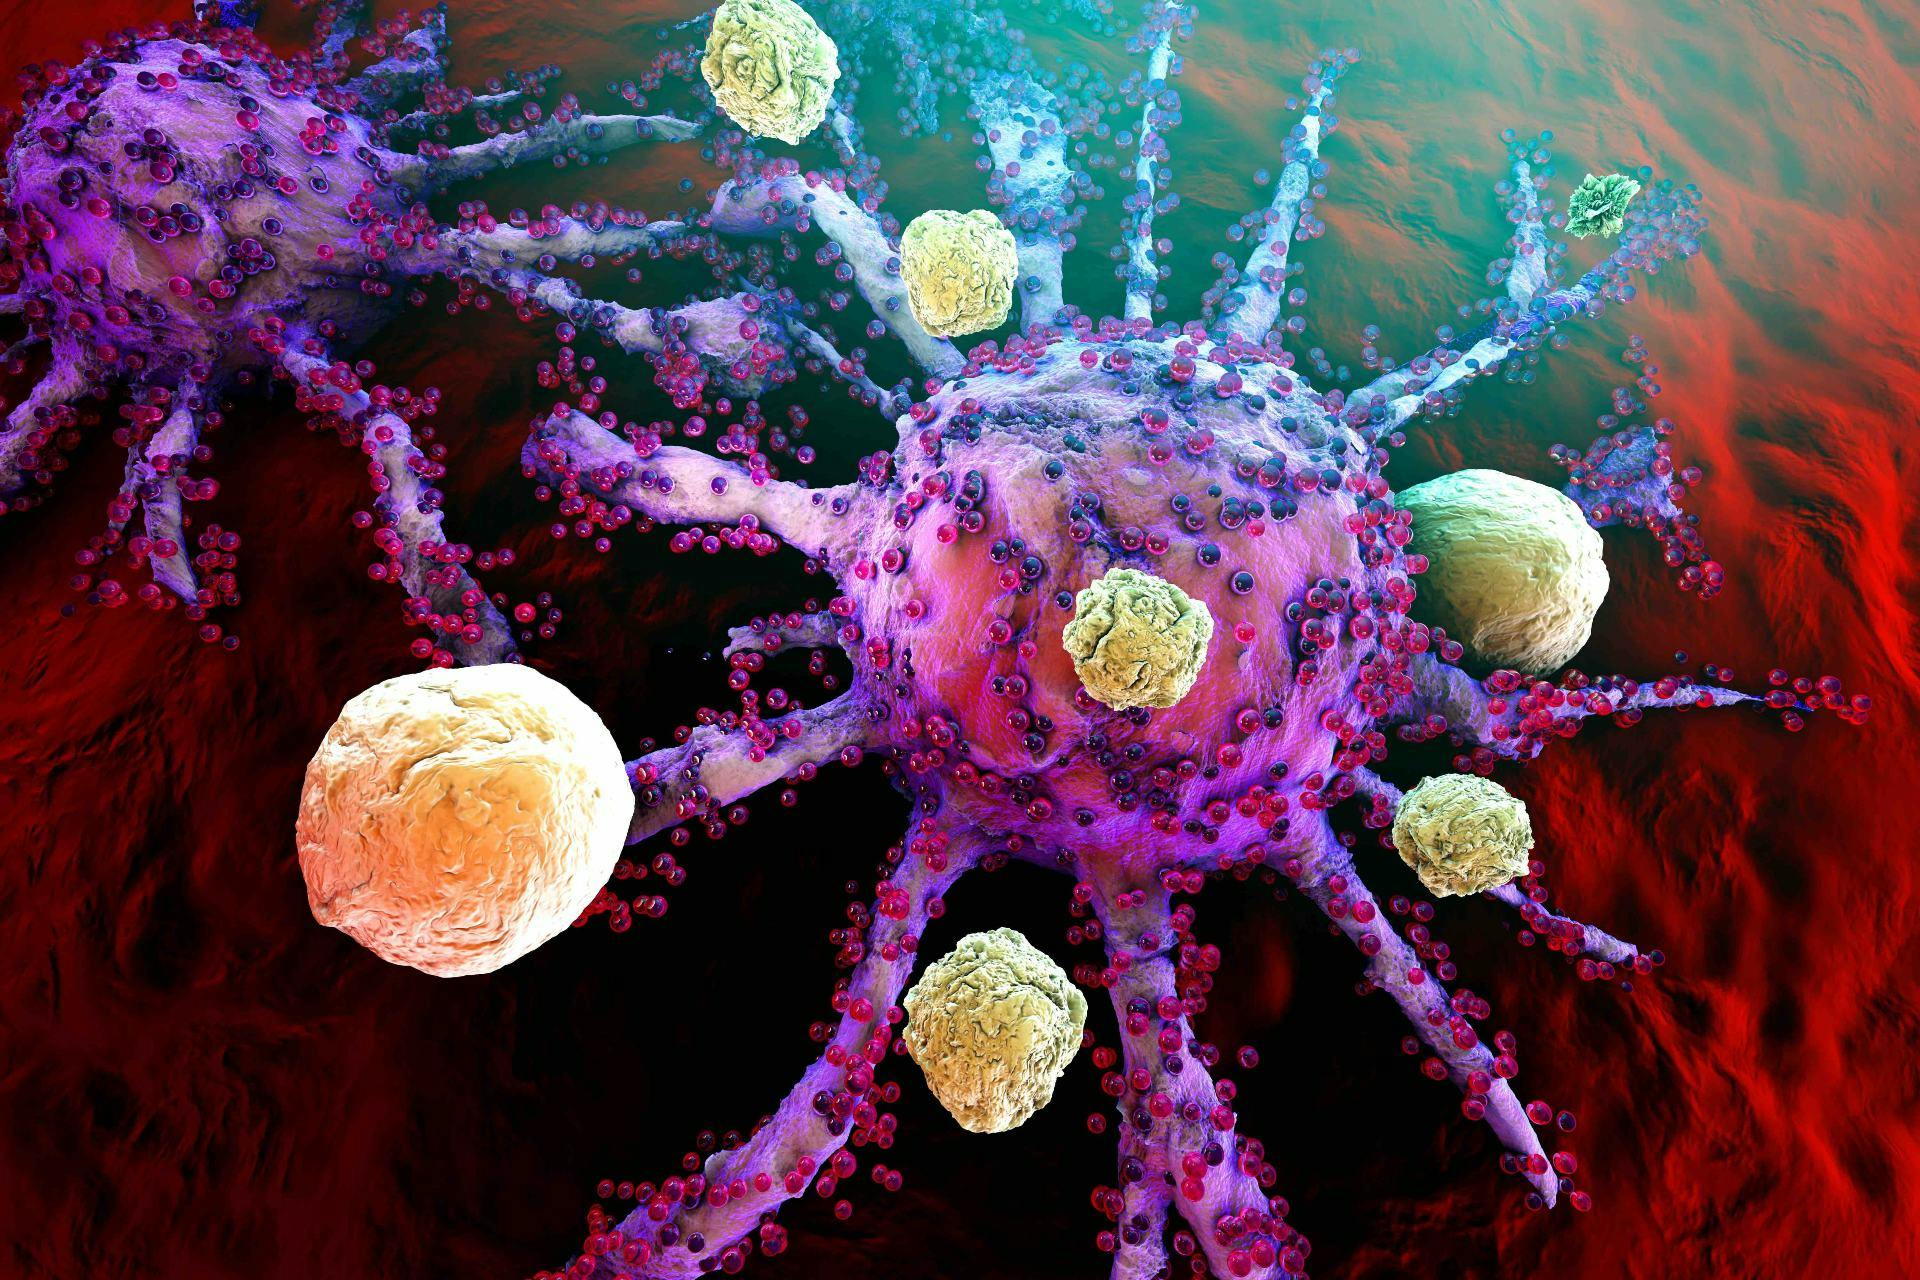 Immune cells attacking cancer | Image credit: Spectral-Design - stock.adobe.com